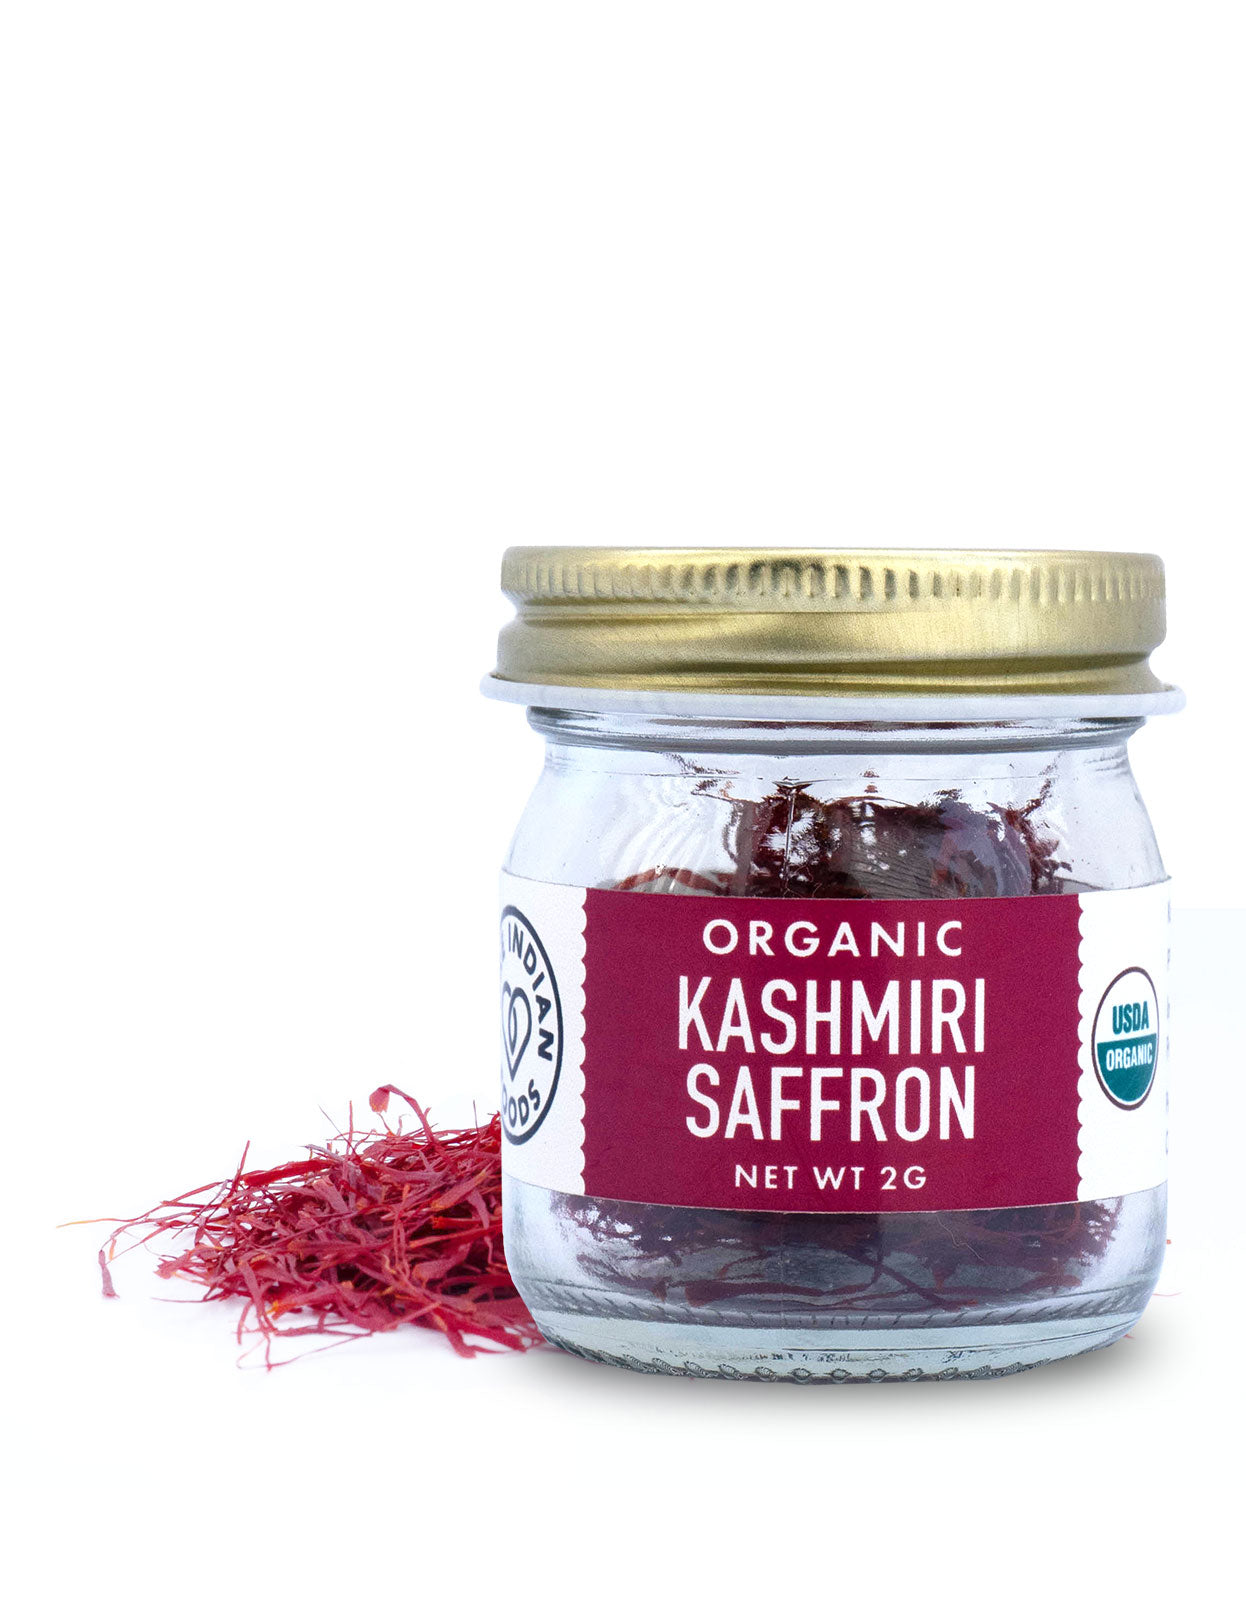 Pure Indian Foods Organic Kashmiri Saffron, 2g, packaged in a glass jar.